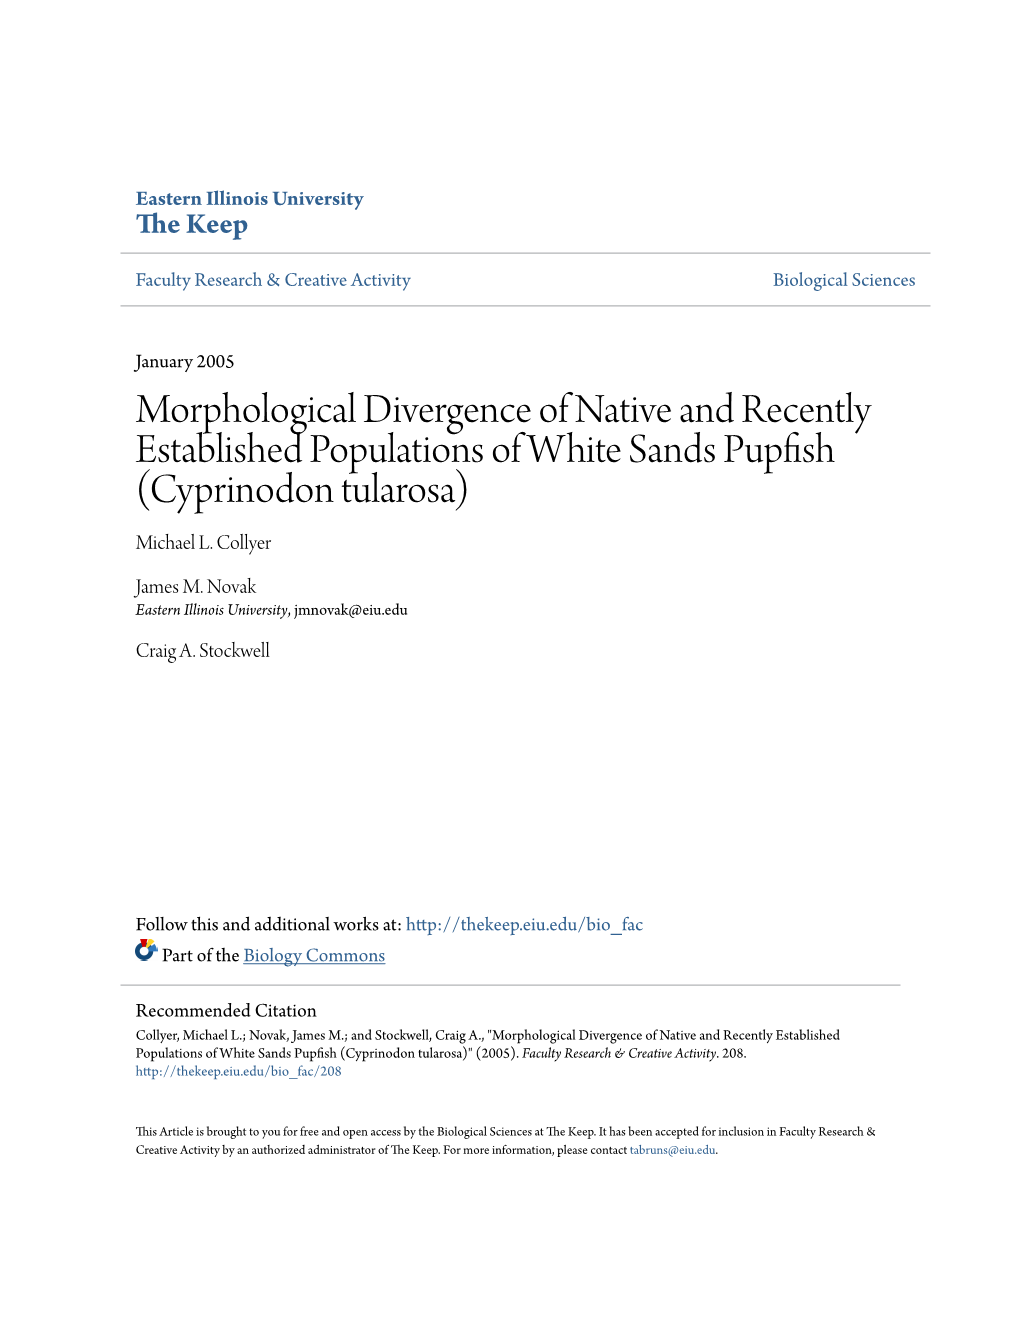 Morphological Divergence of Native and Recently Established Populations of White Sands Pupfish (Cyprinodon Tularosa) Michael L